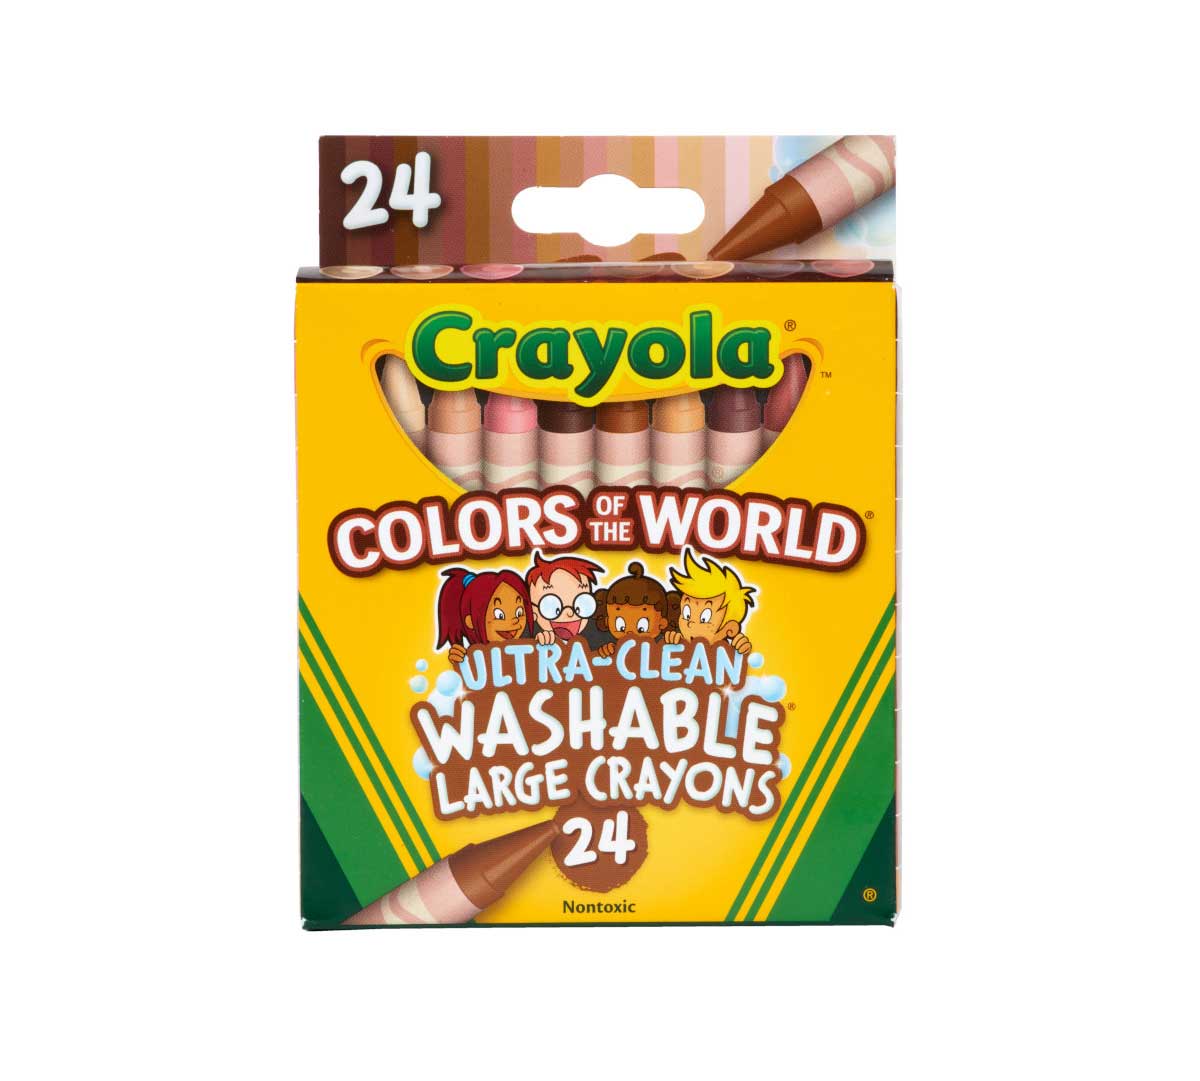 20) Crayola Colors of the world Colored Pencils (medium almond) BULK